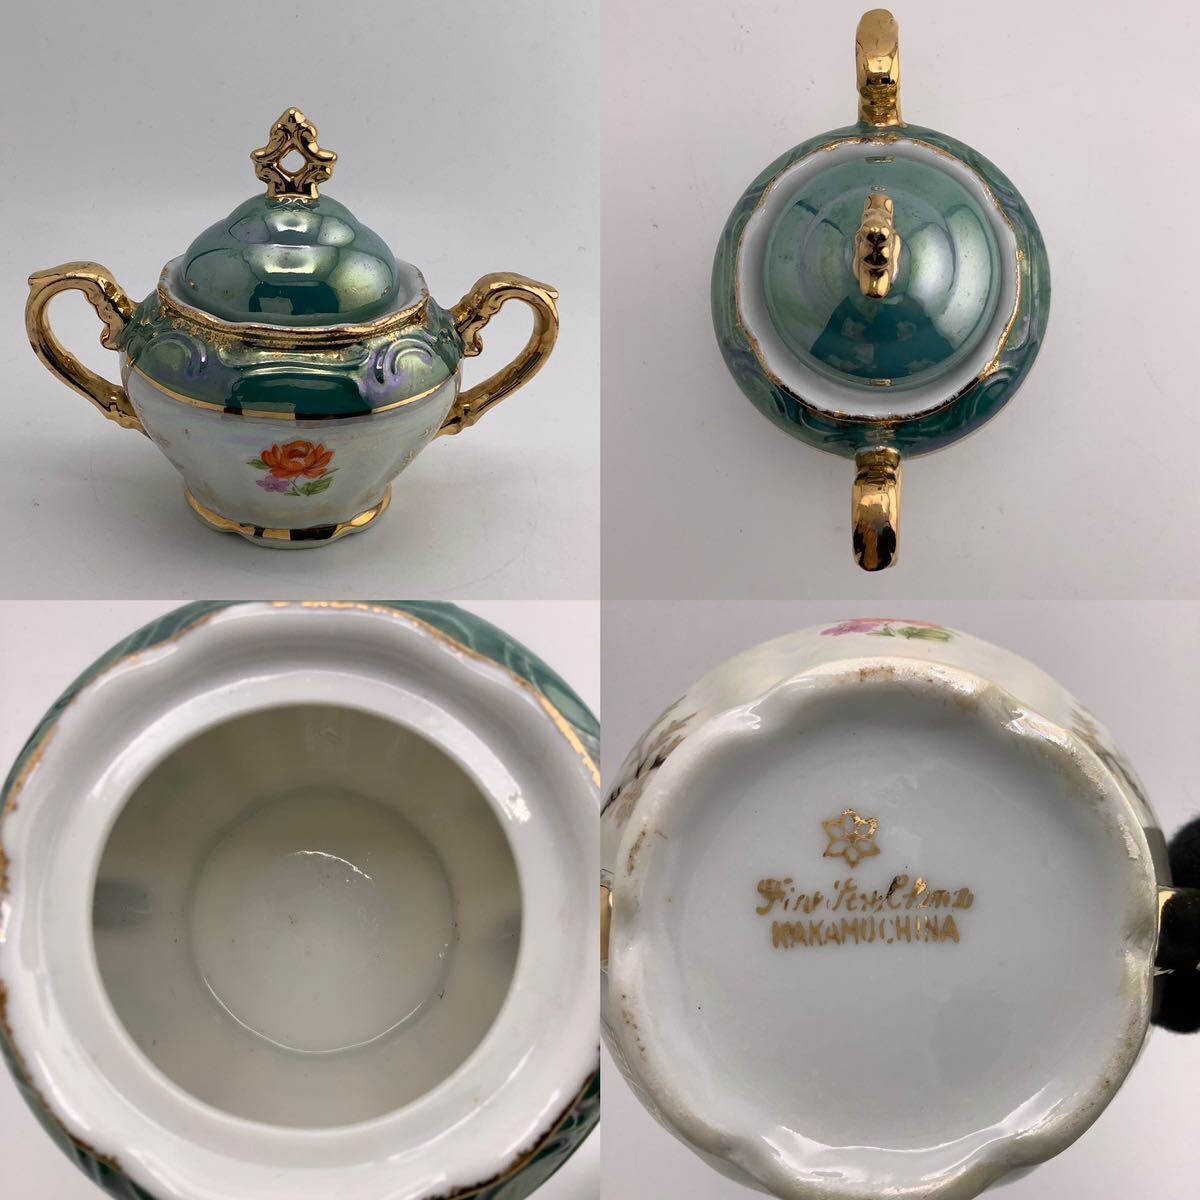 KAKAMU CHINA чай комплект teapot молоко pot сахарница посуда античный Showa Retro коллекция [k8234-y220]